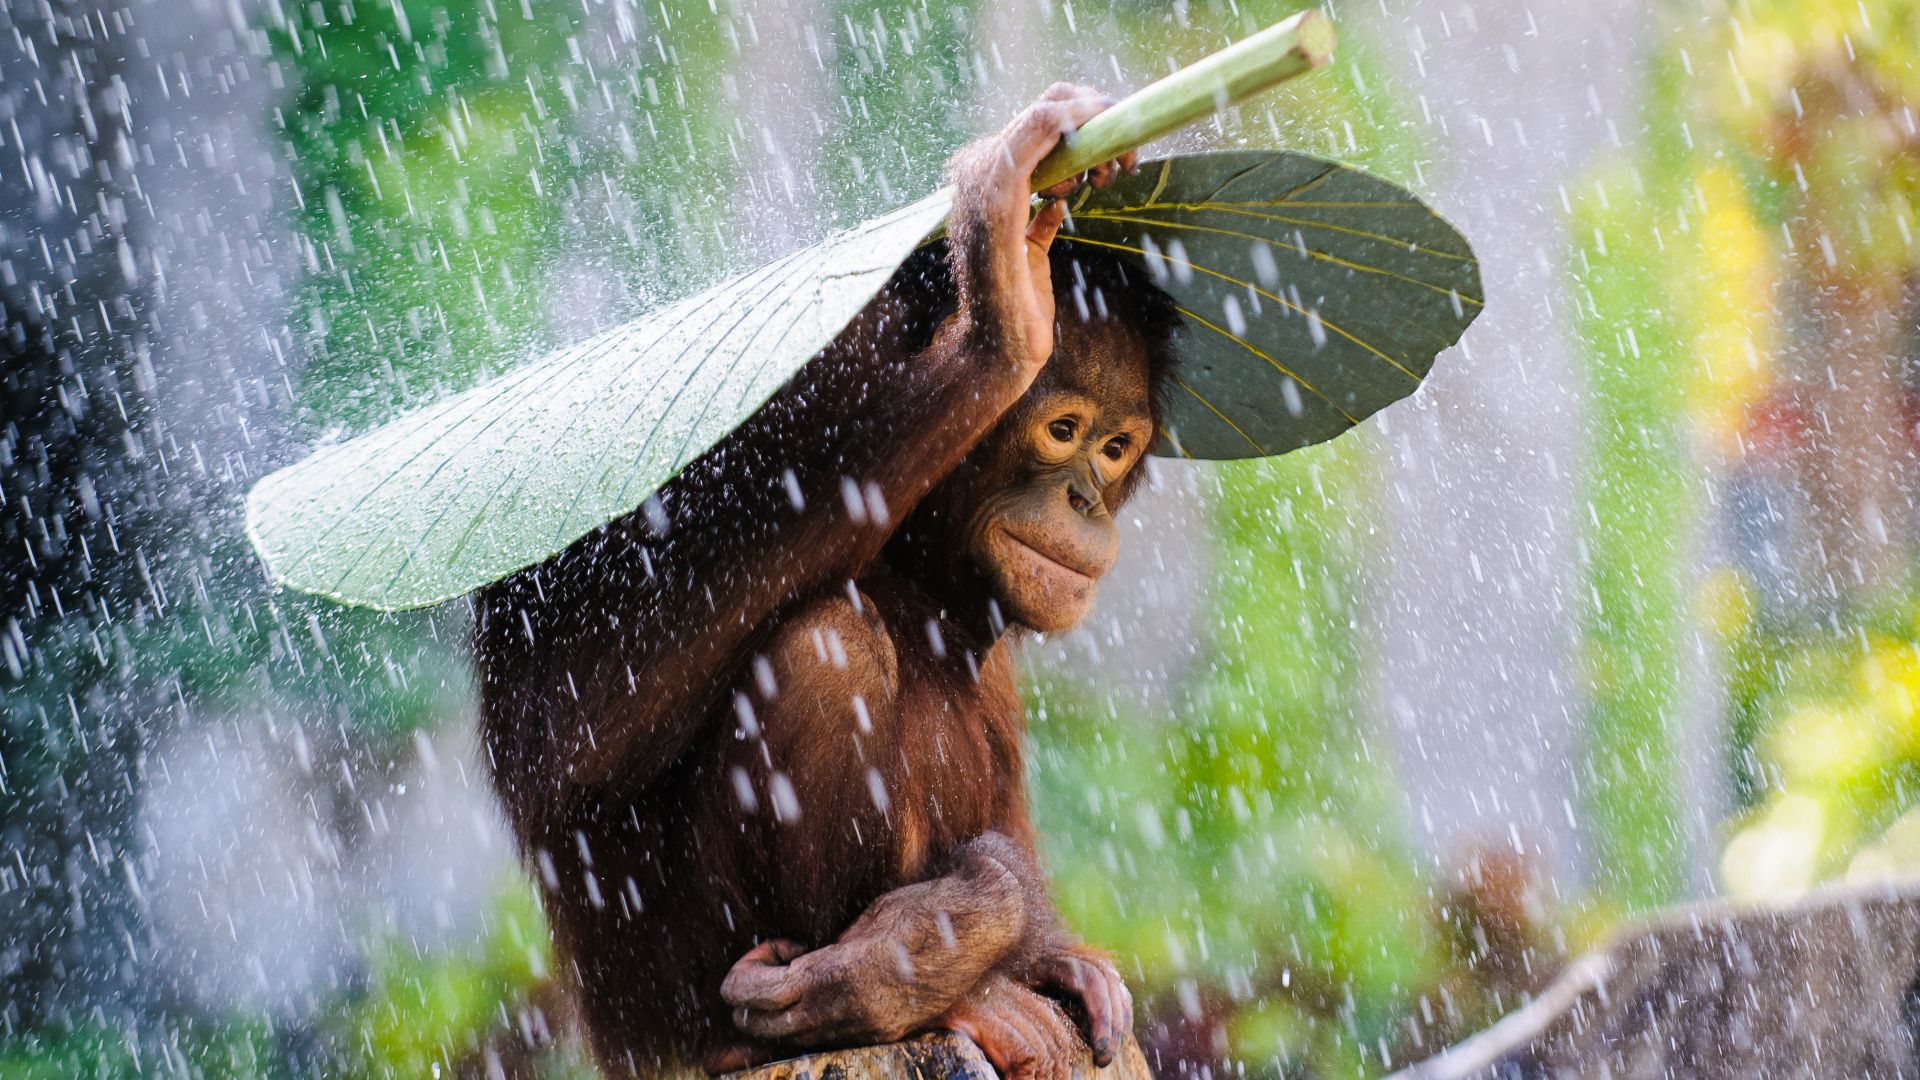 Orangutan, Bali, rain, monkey, 2015 Sony World Photography Awards (horizontal)